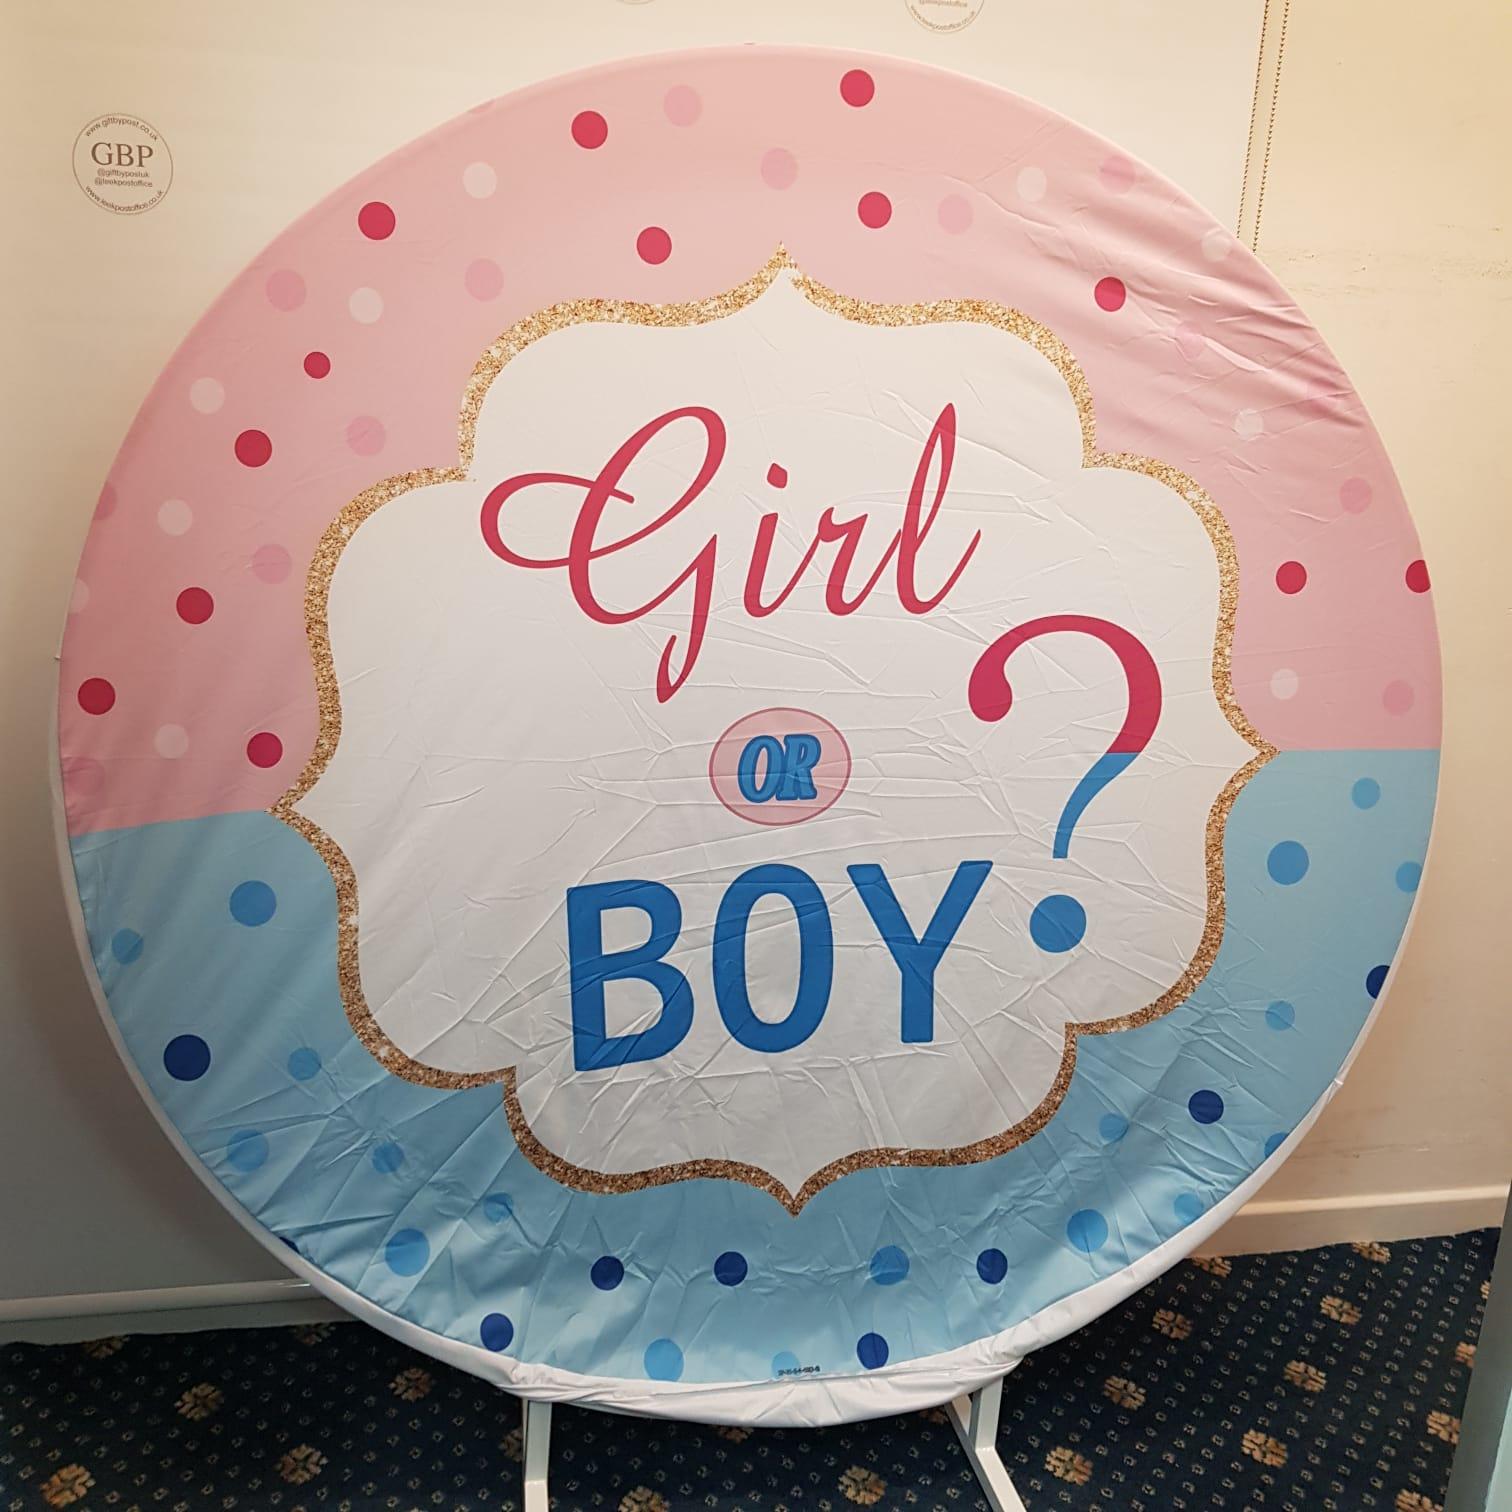 1.5m hoop, backdrop, girl or boy